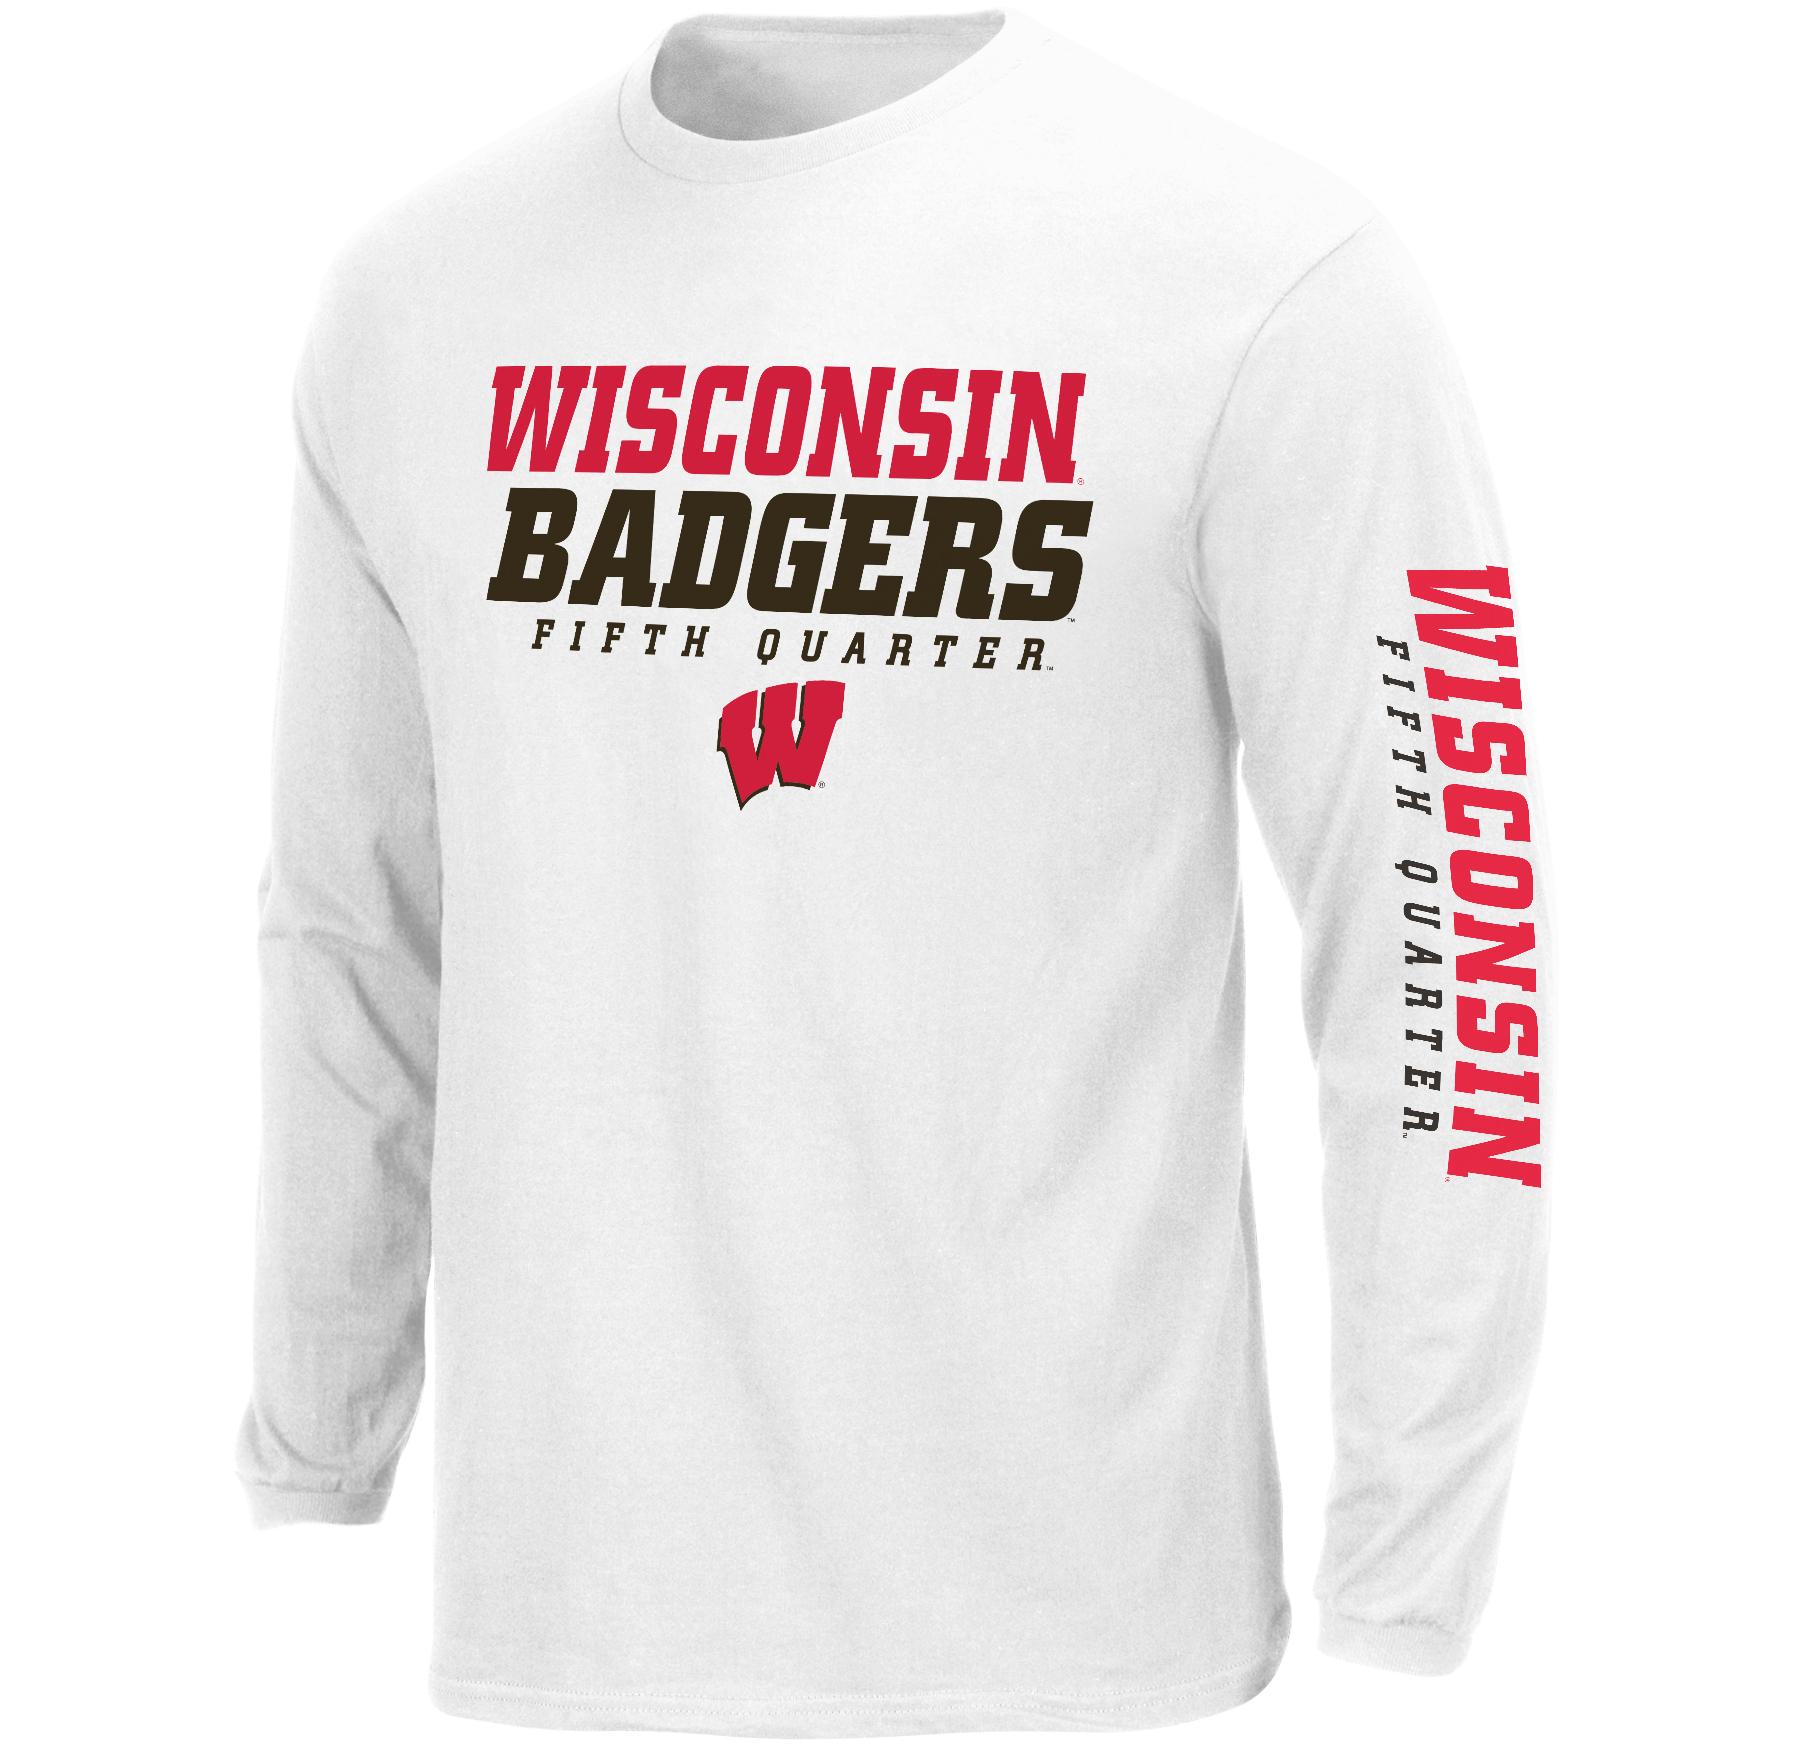 NCAA Men's Long-Sleeve T-Shirt - Wisconsin Badgers